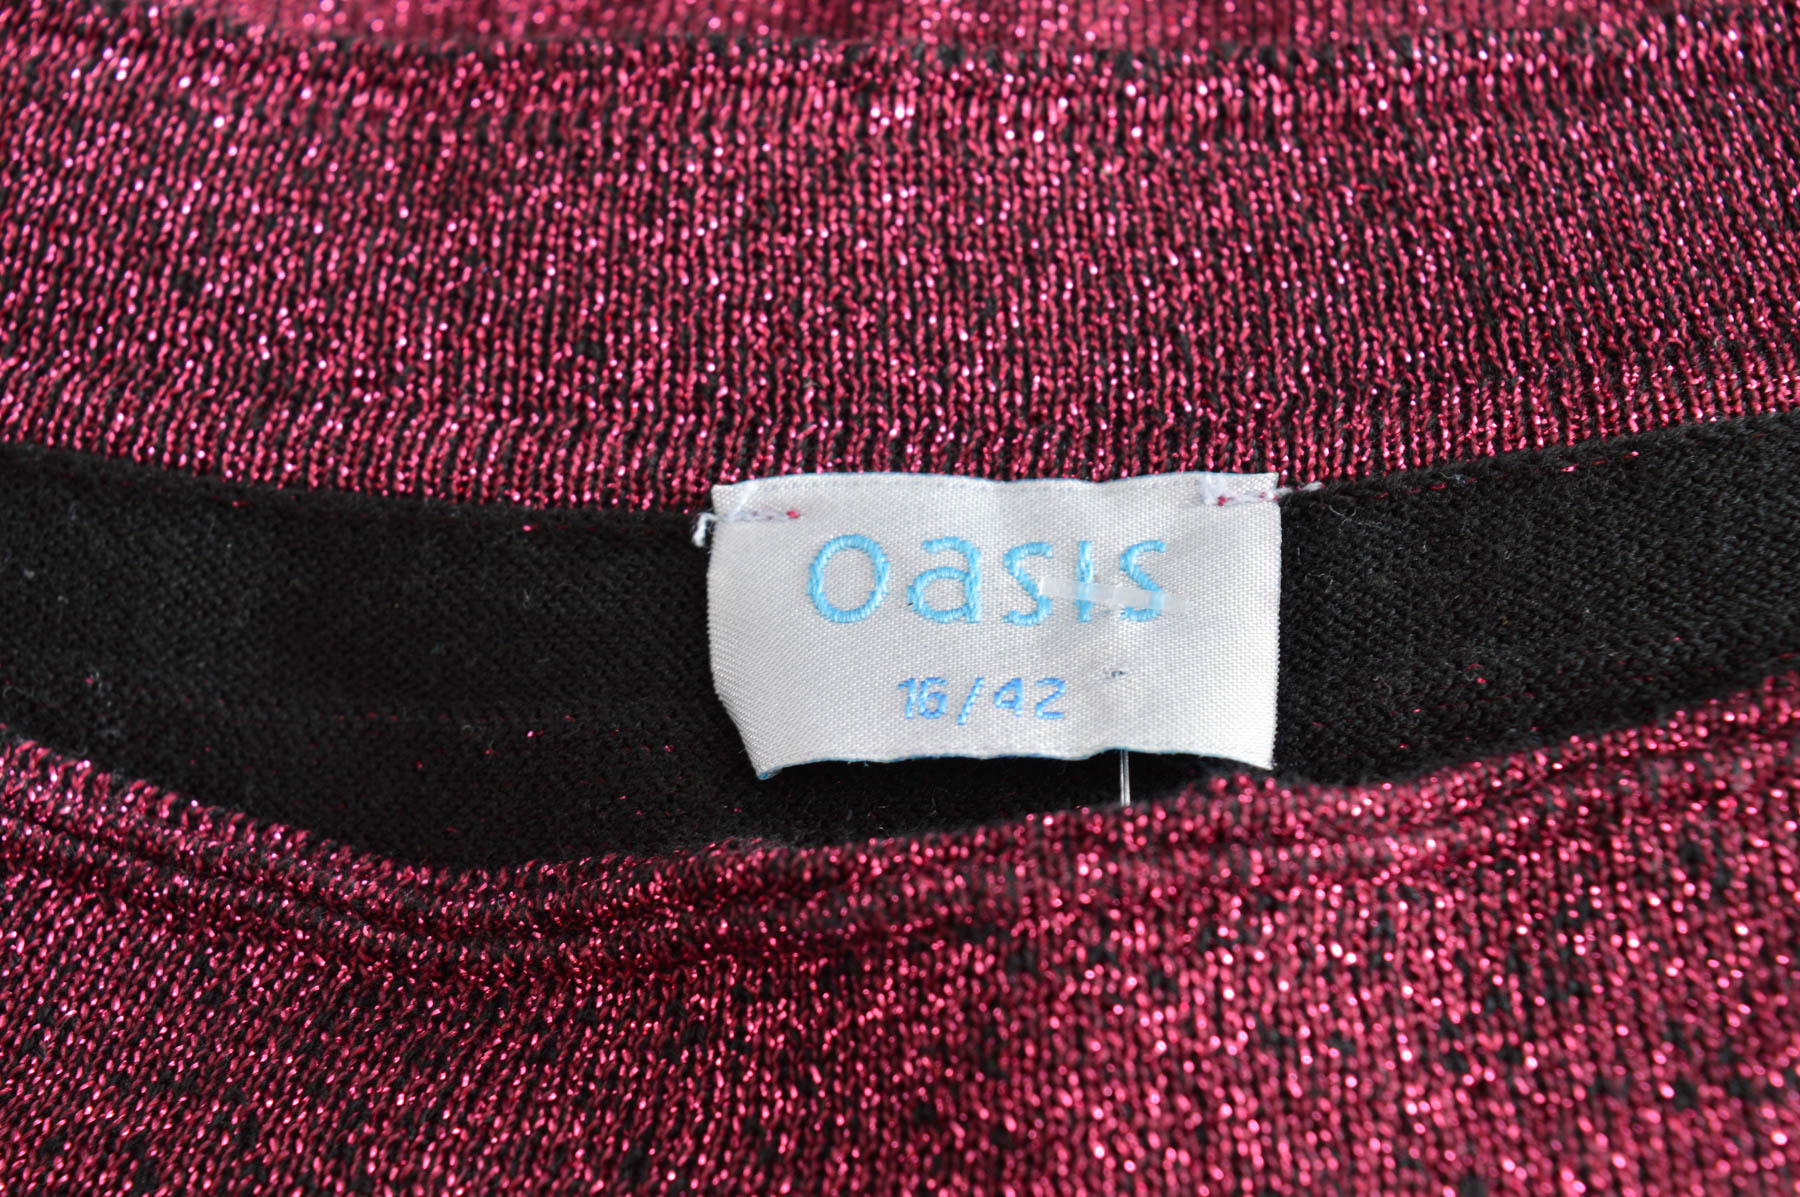 Dress - Oasis - 2